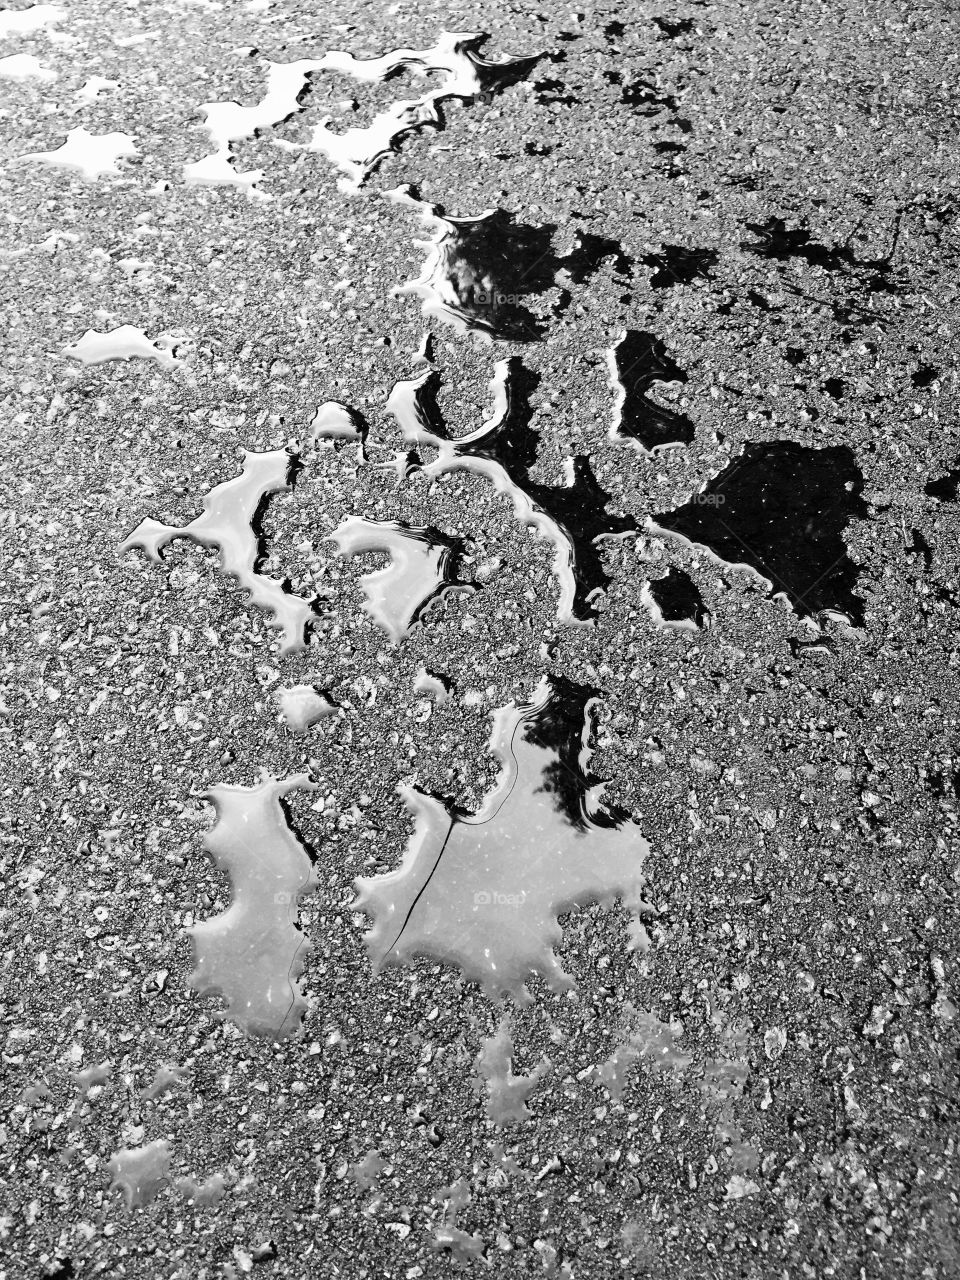 Water on the asphalt